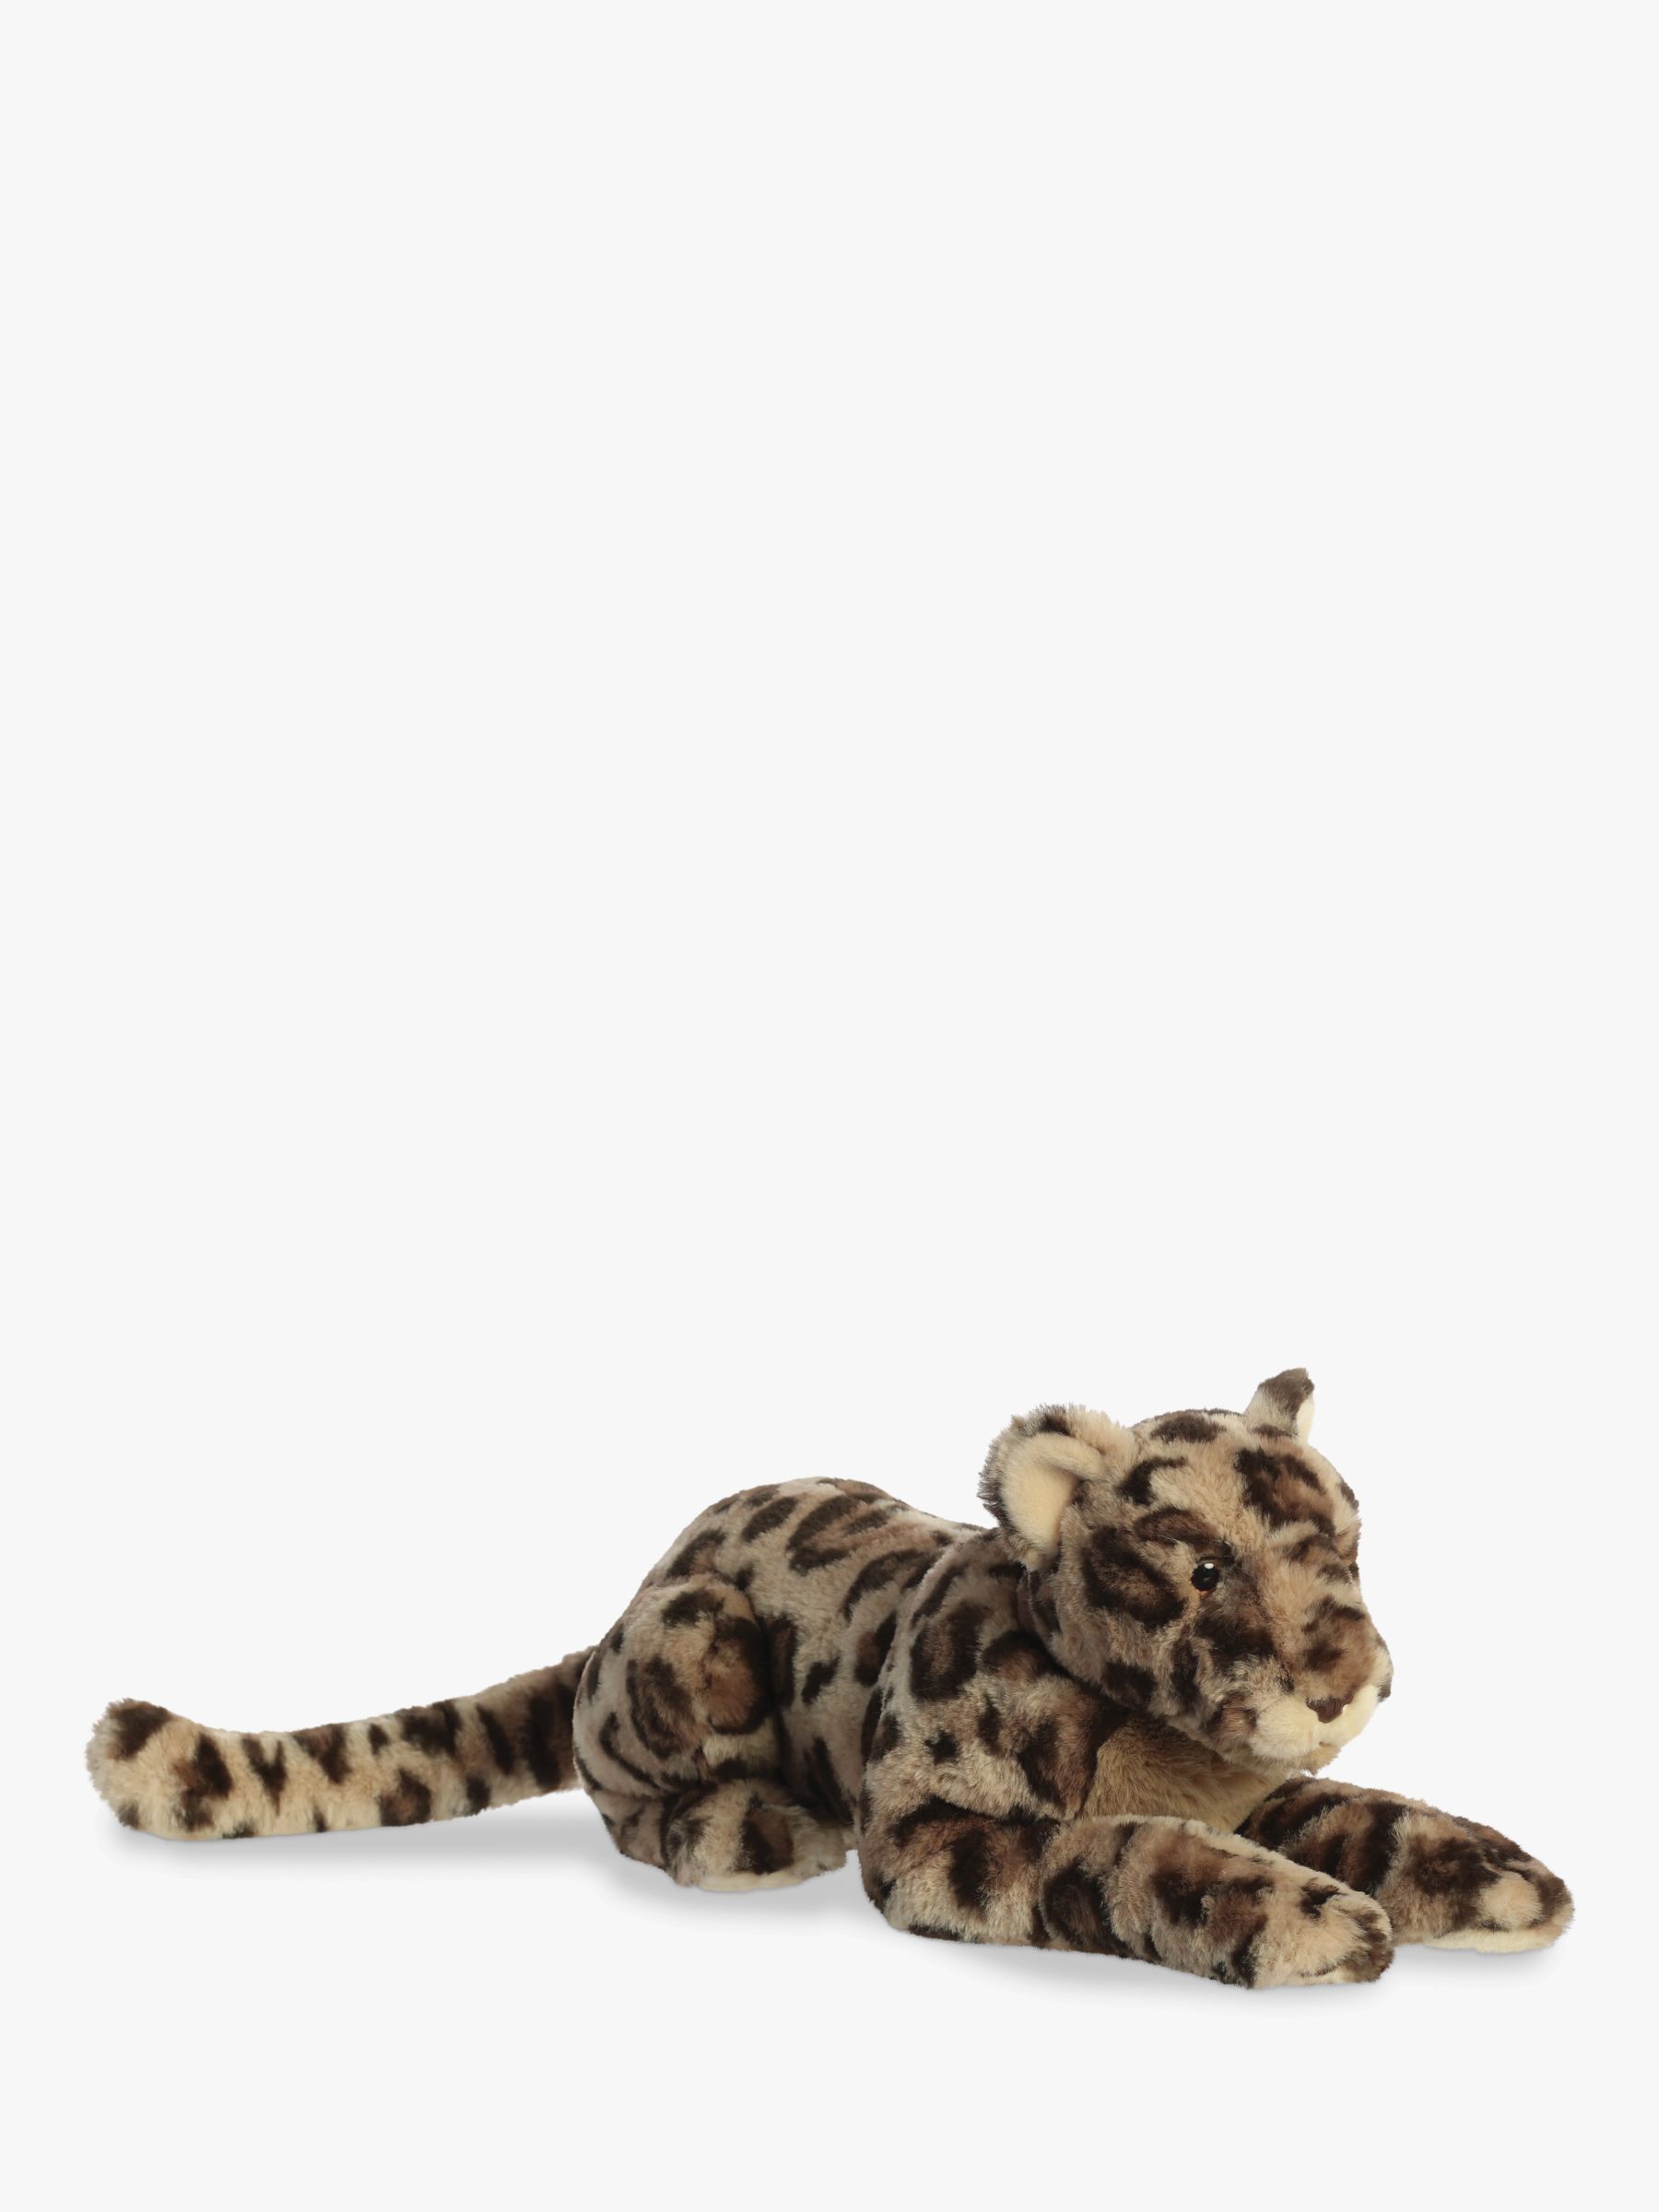 jaguar cuddly toy